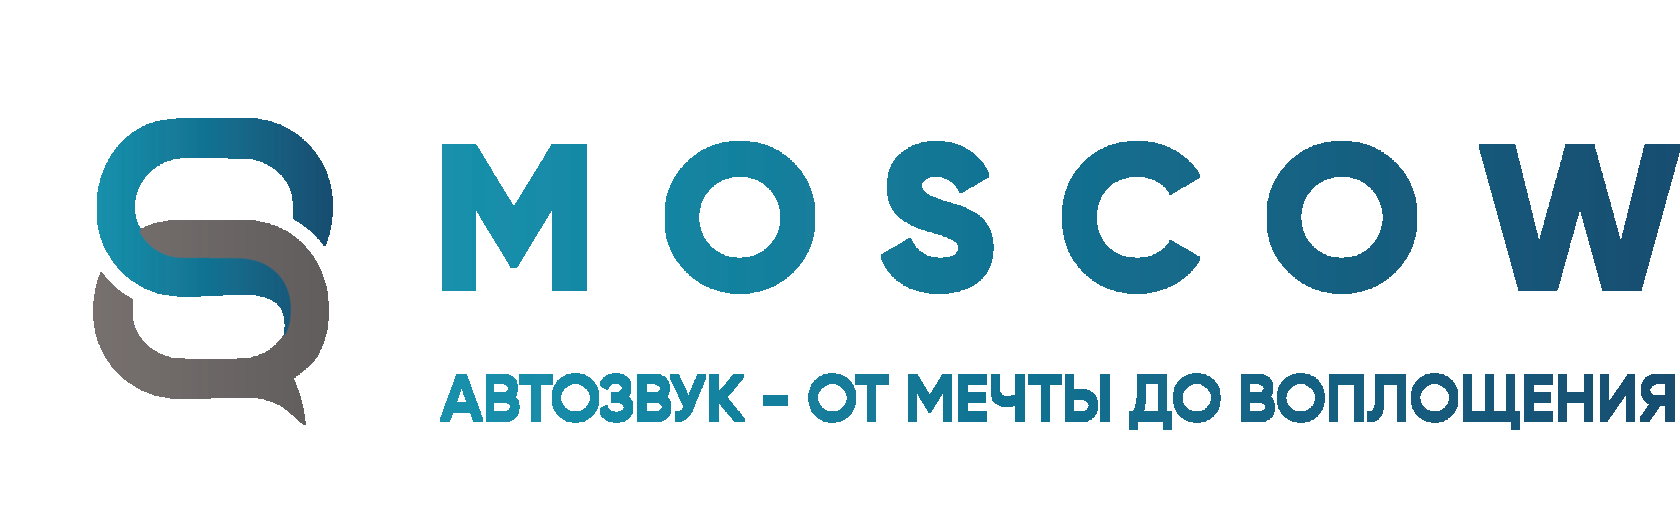 Sound Quality Moscow logo